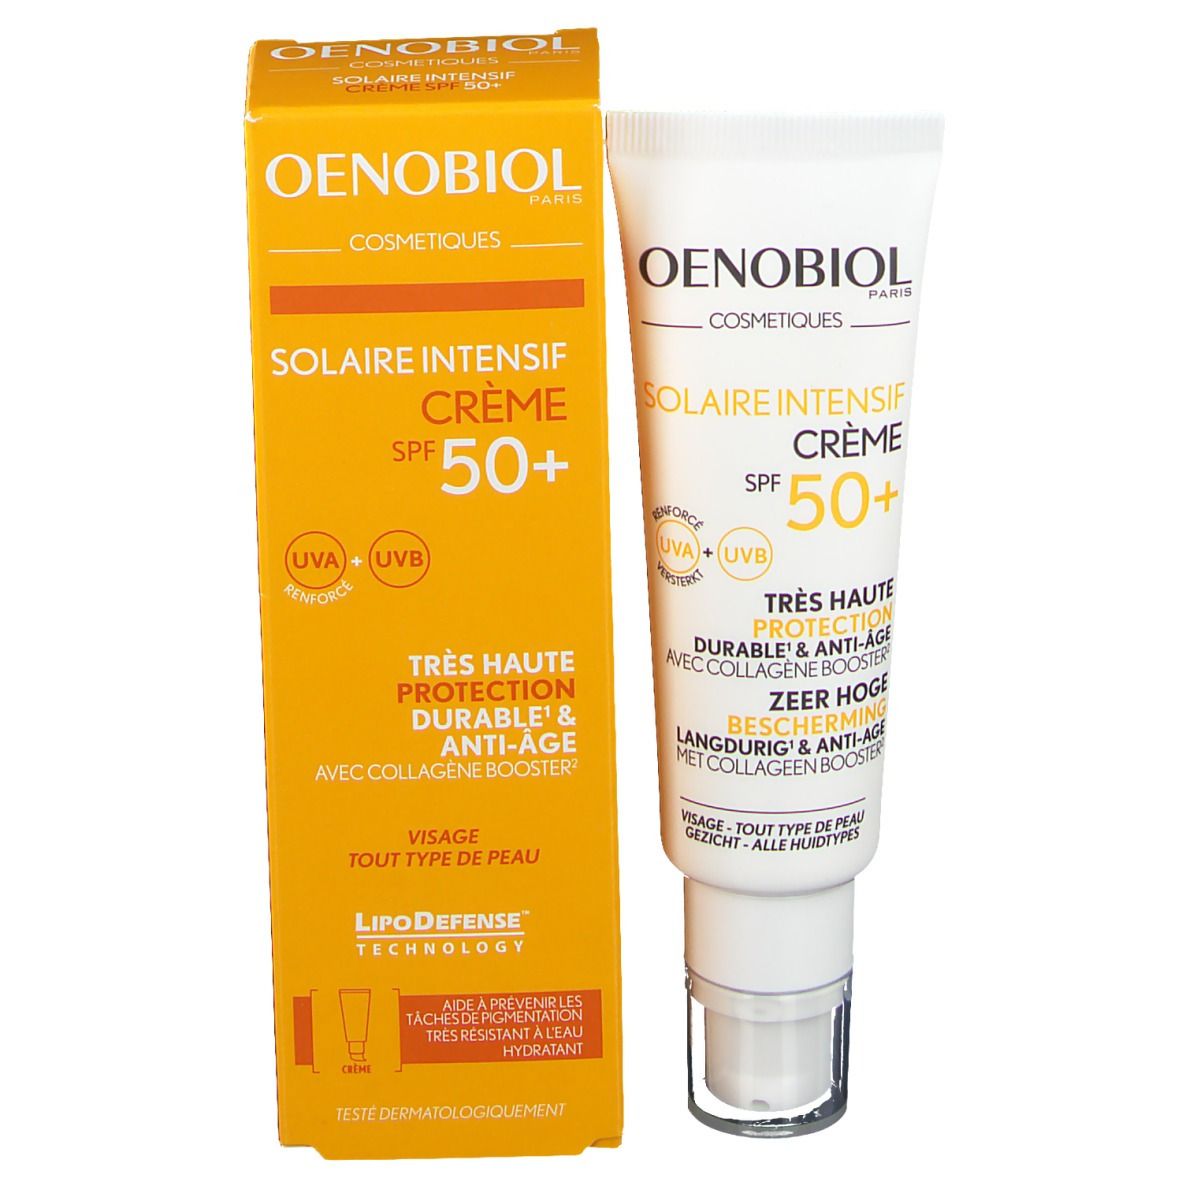 Oenobiol Solaire Intensif Crème SPF50+